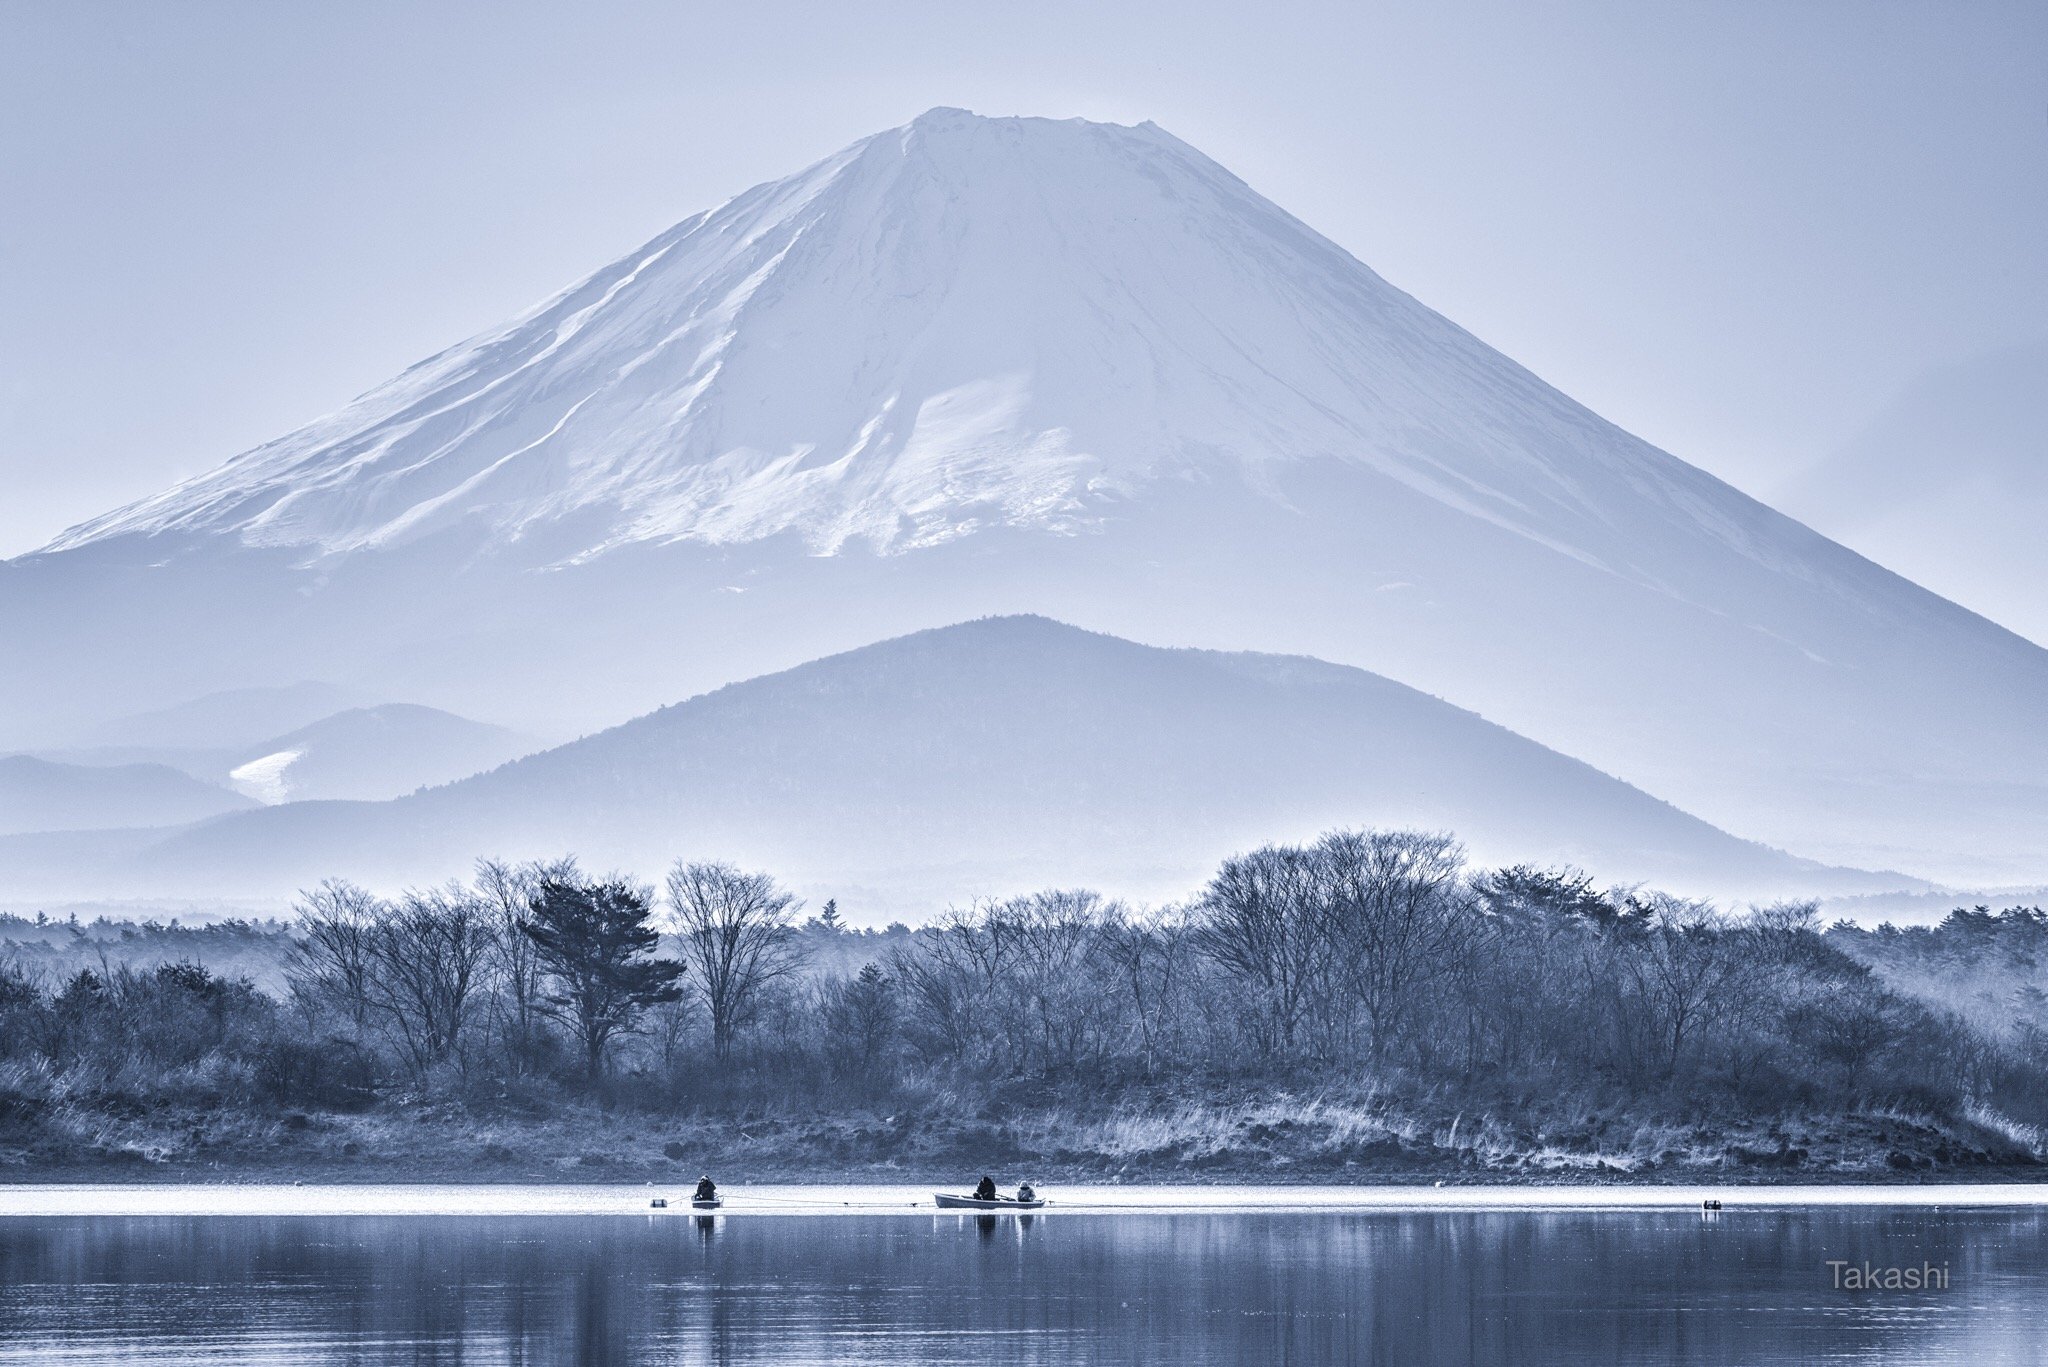 Fuji,mountain,tree,lake,boat,fishing,Japan,snow,landscape,fisherman,blue, Takashi